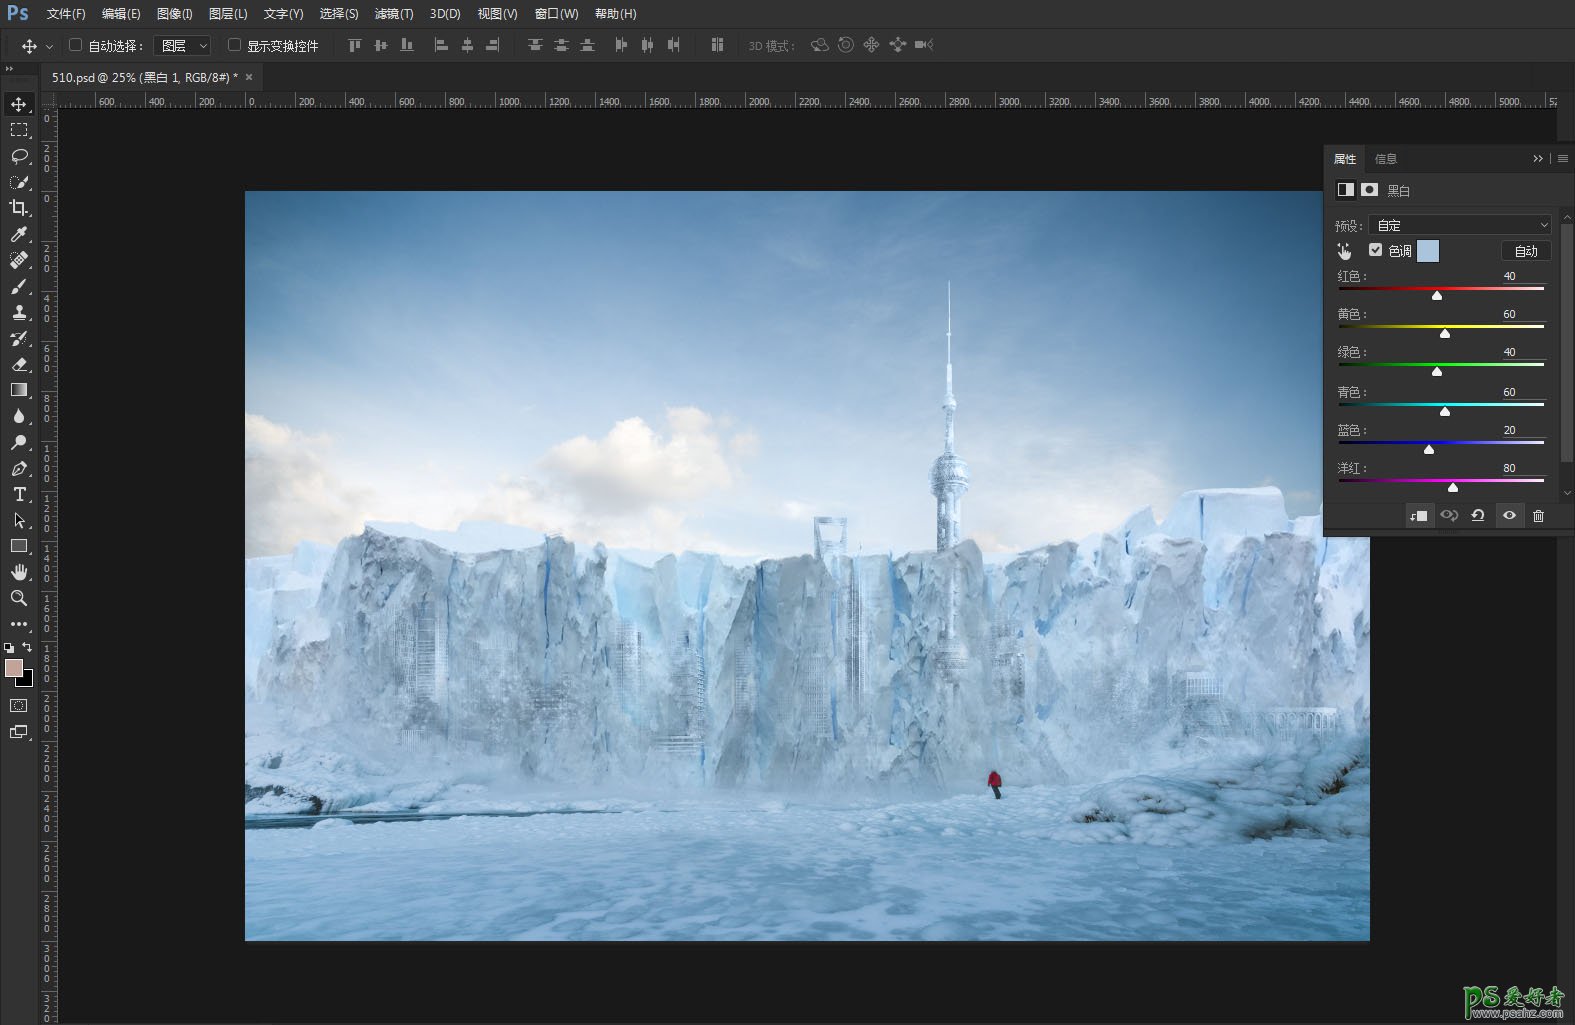 PS场景合成实例：创意打造一张奇幻风格的冰封城市场景图片。